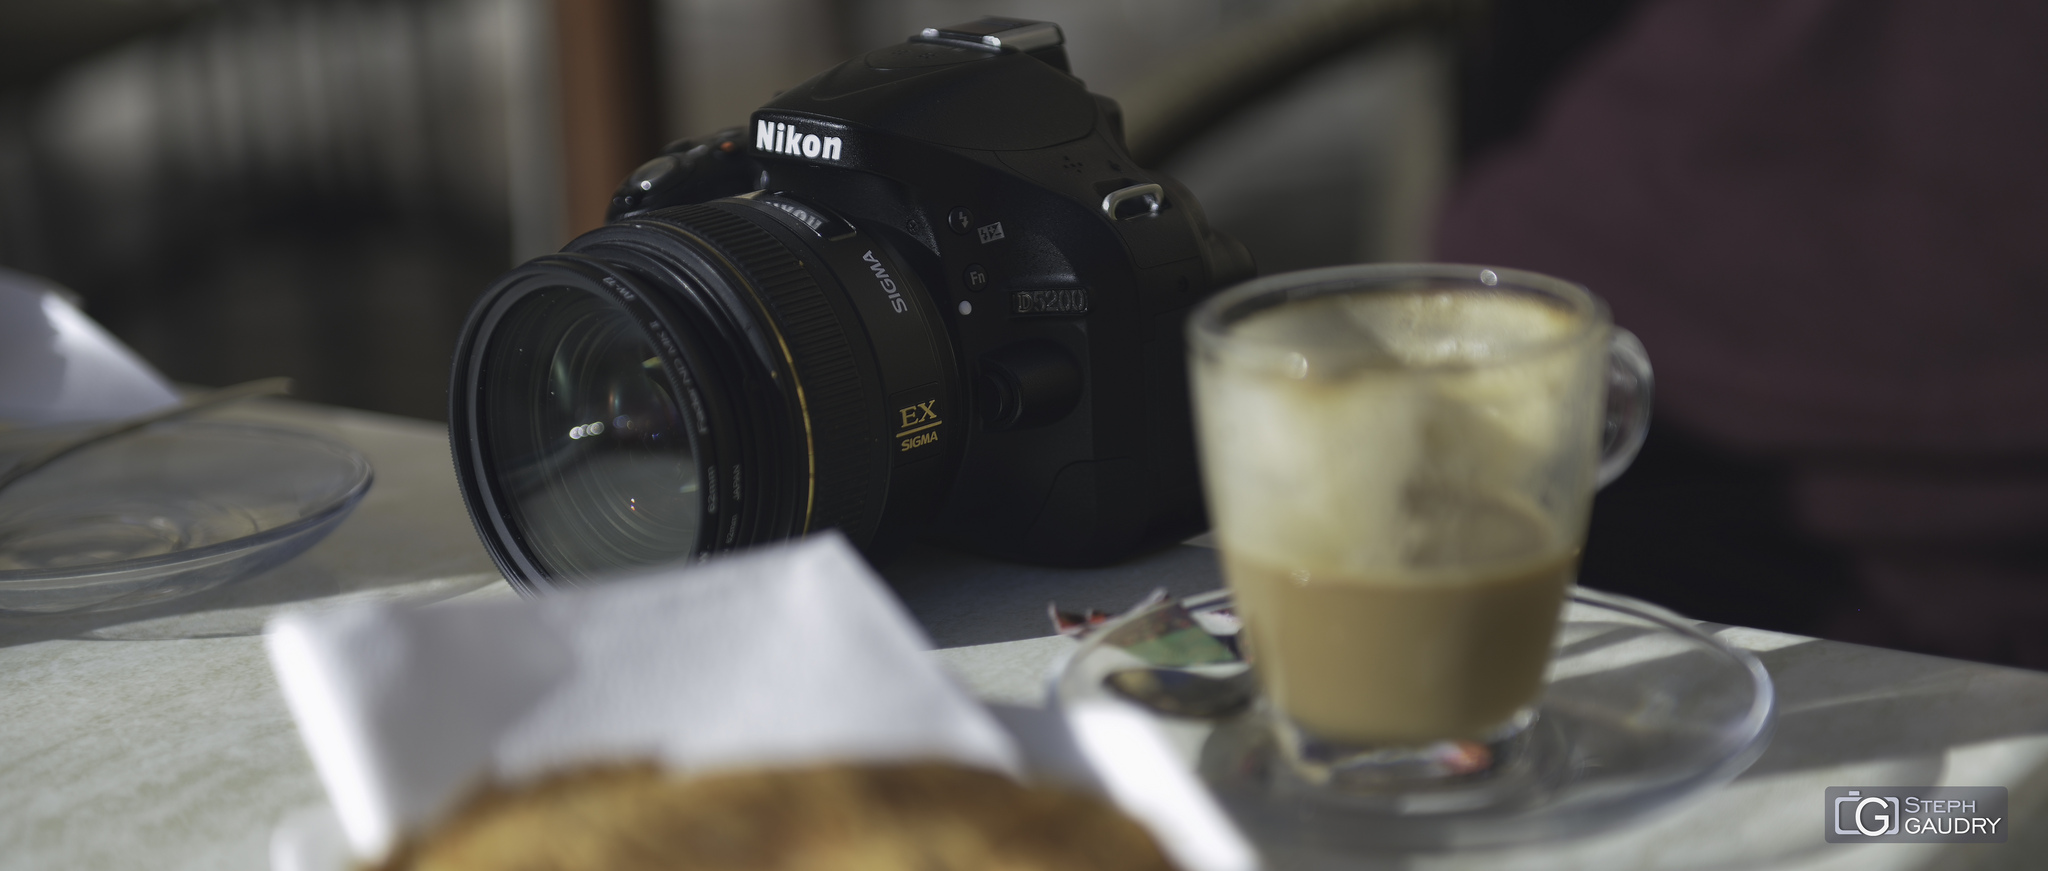 Nikon D5200 - Sigma 30mm f1,4 EX DC HSM [Click to start slideshow]